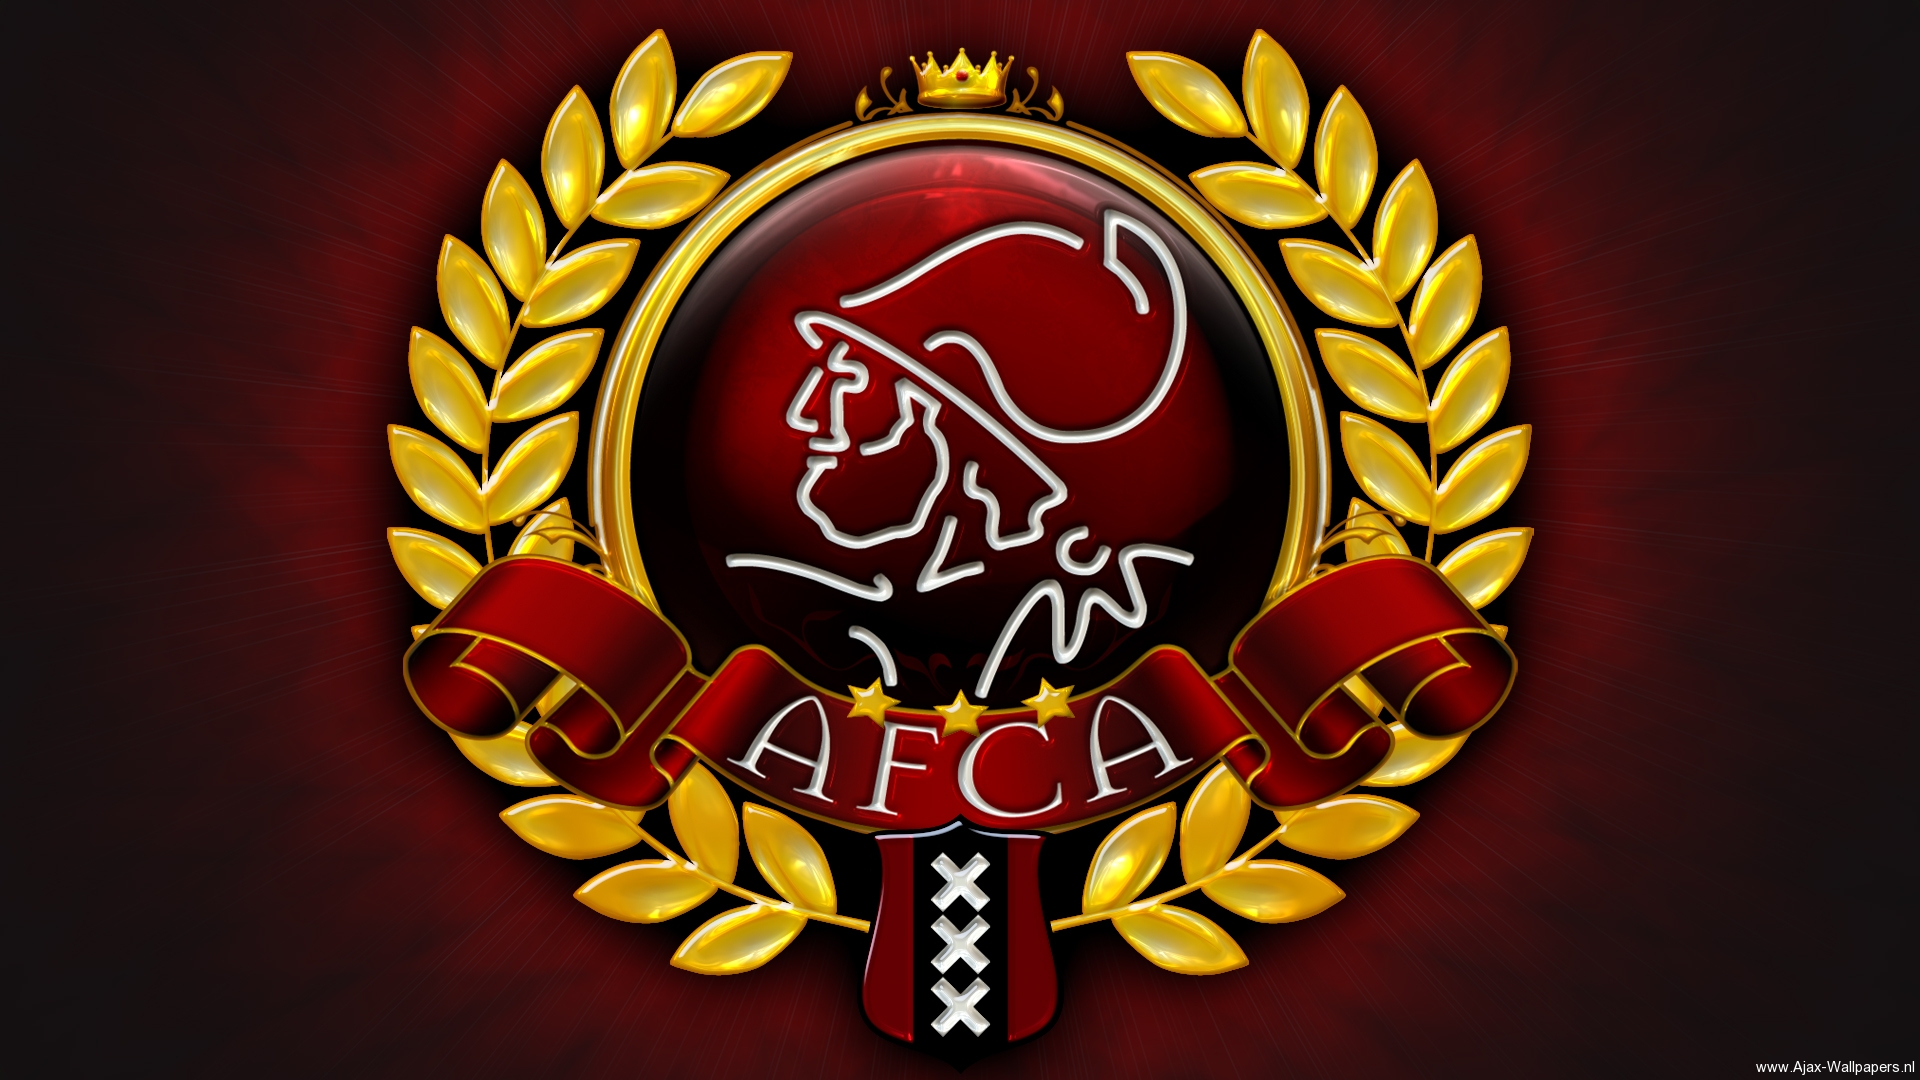 afc ajax, sports, emblem, logo, soccer